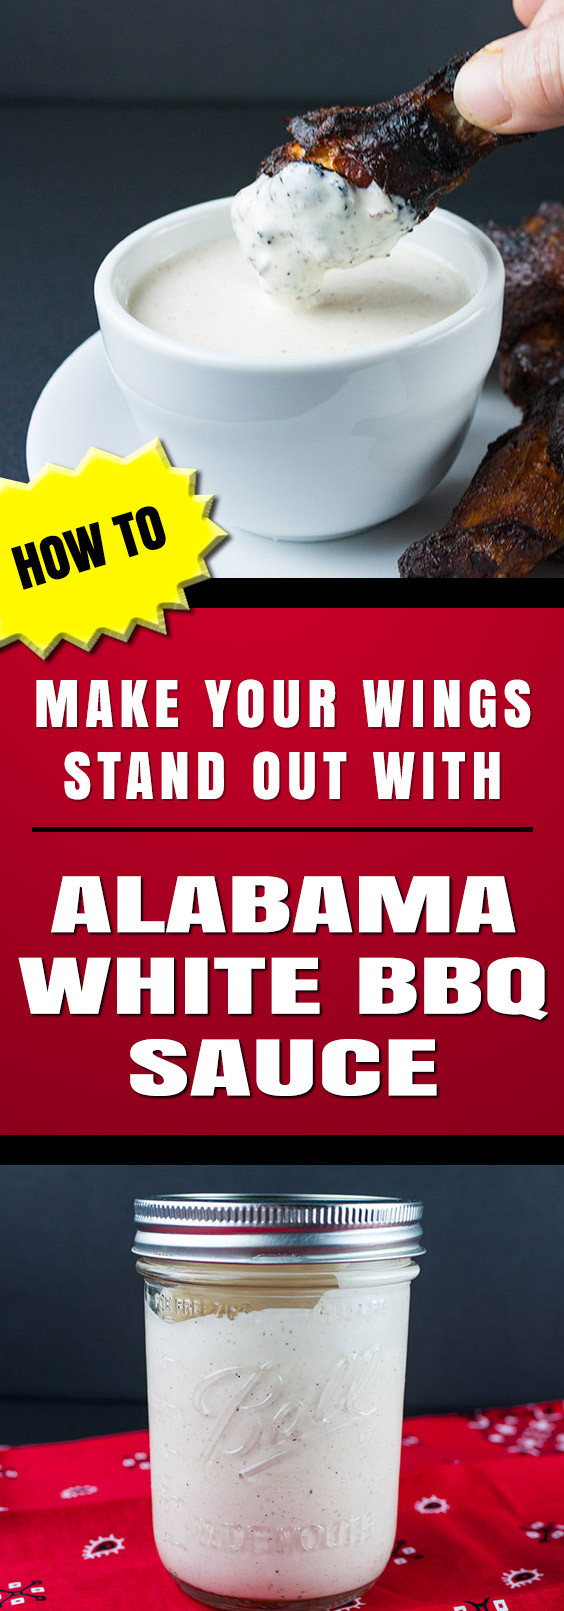 Alabama Bbq Sauce
 Alabama White BBQ Sauce Elevate Your BBQ To The Next